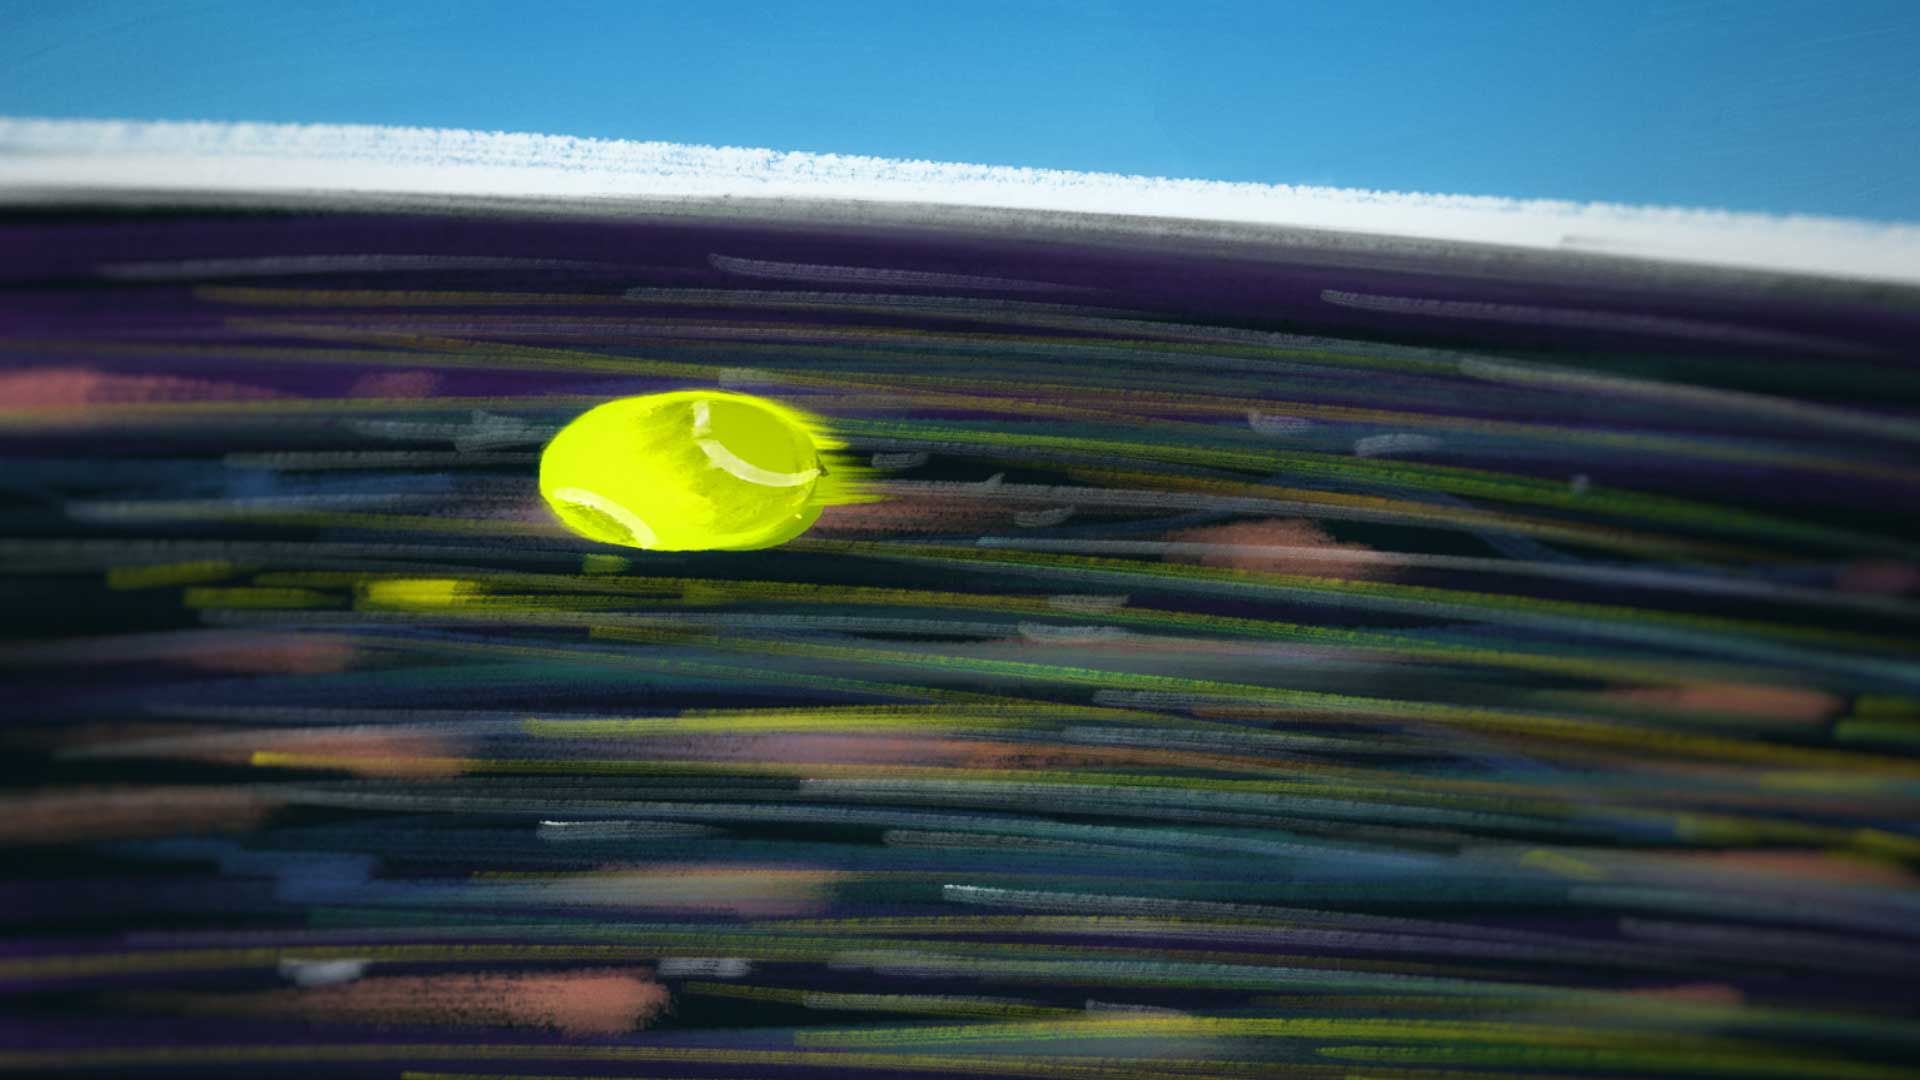 Wimbledon2019_EVAN_30s_25fps_v4c.jpg